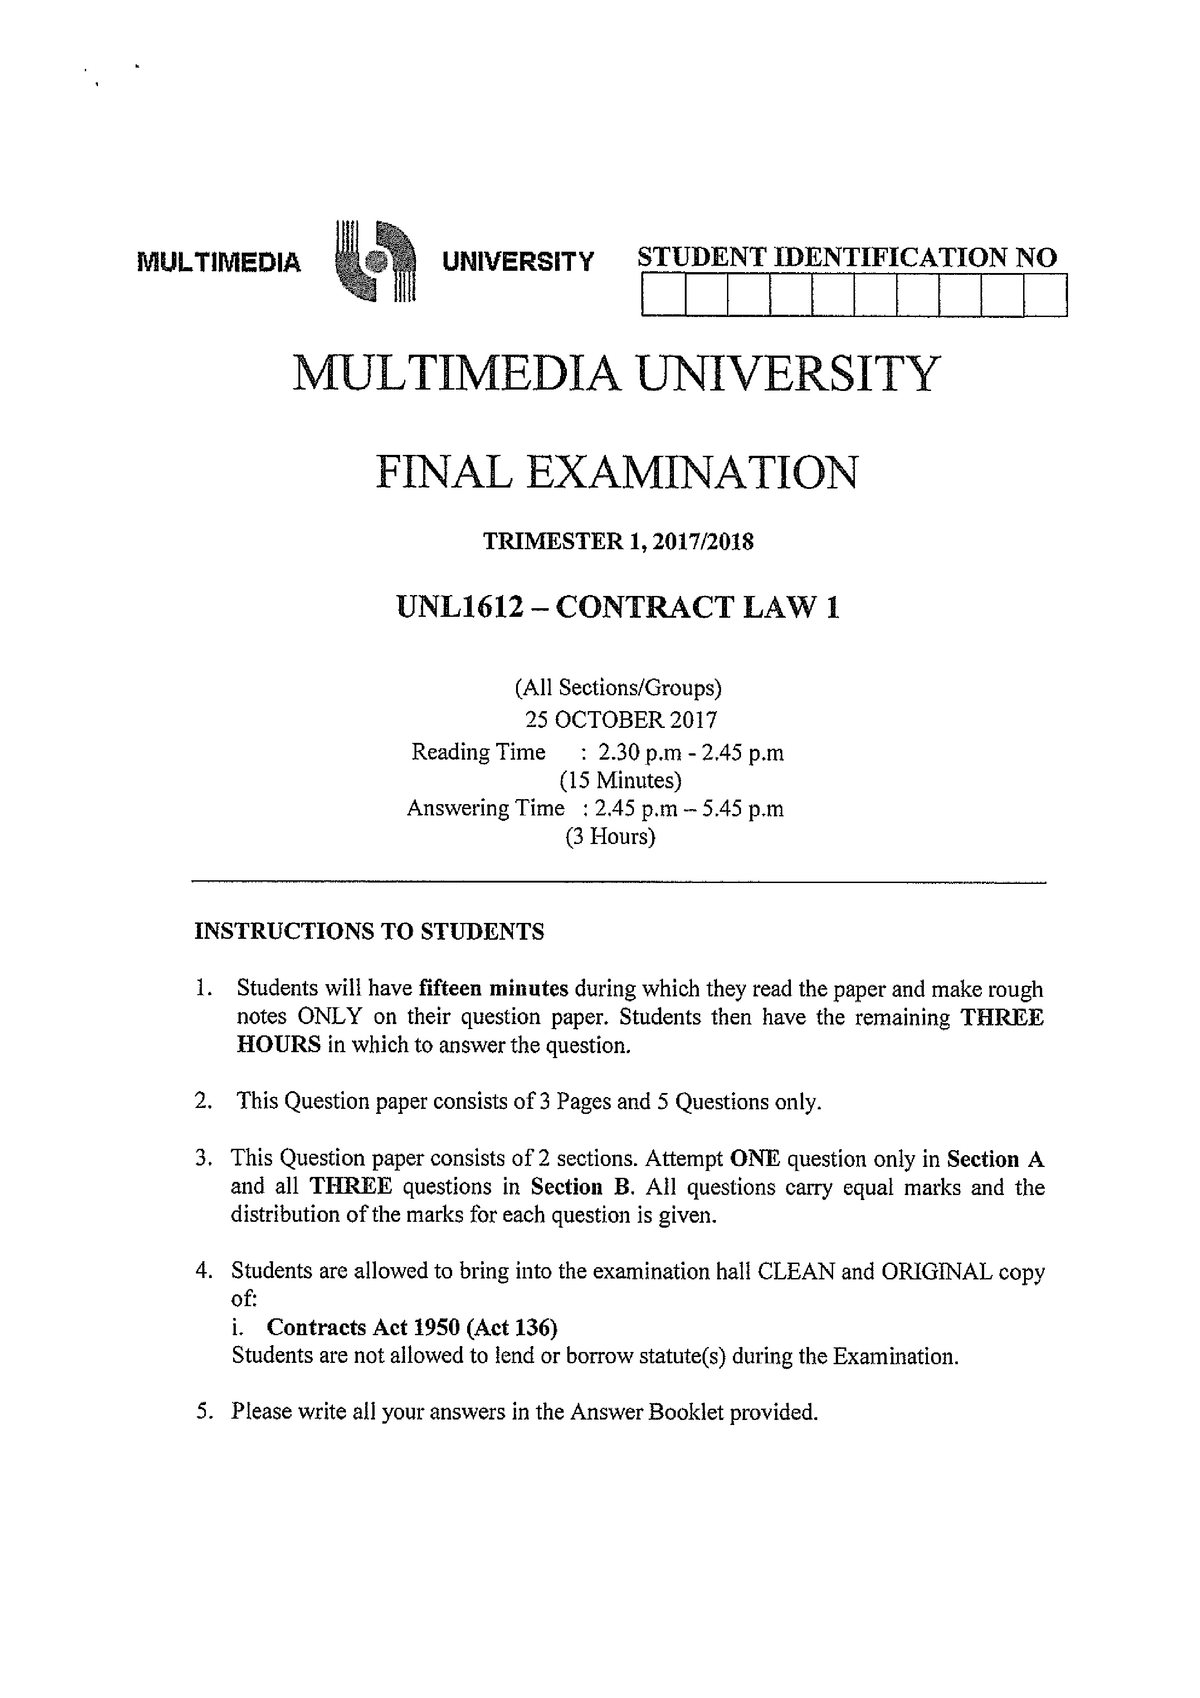 exam-15-october-2017-questions-university-student-identification-no